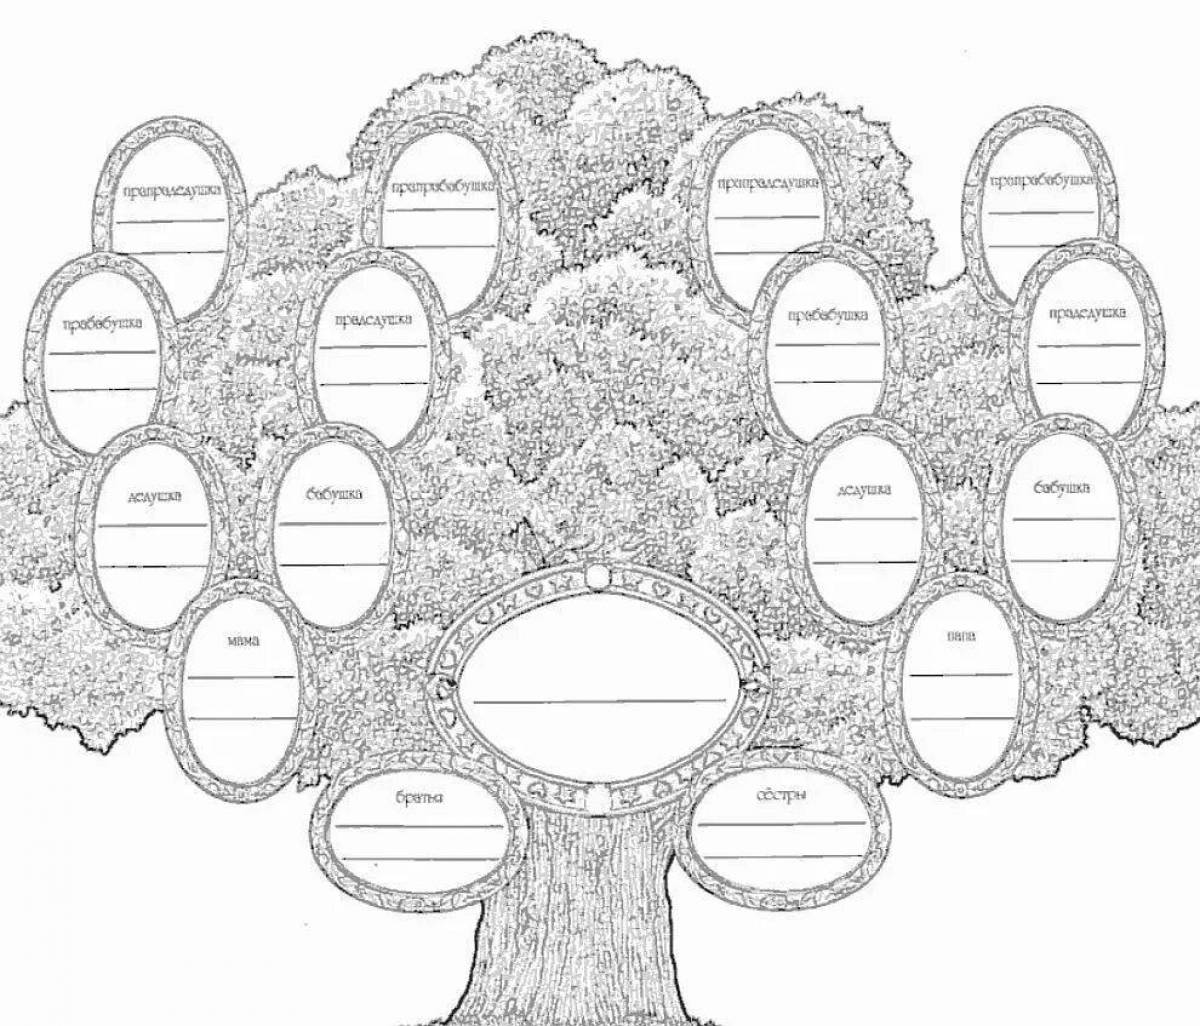 Древо семьи 2 класс окружающий мир шаблон. Геологическое Древо семьи. Древо семьи рисунок схема. Геологическое дерево схема. Генеалогическое дерево моей семьи.